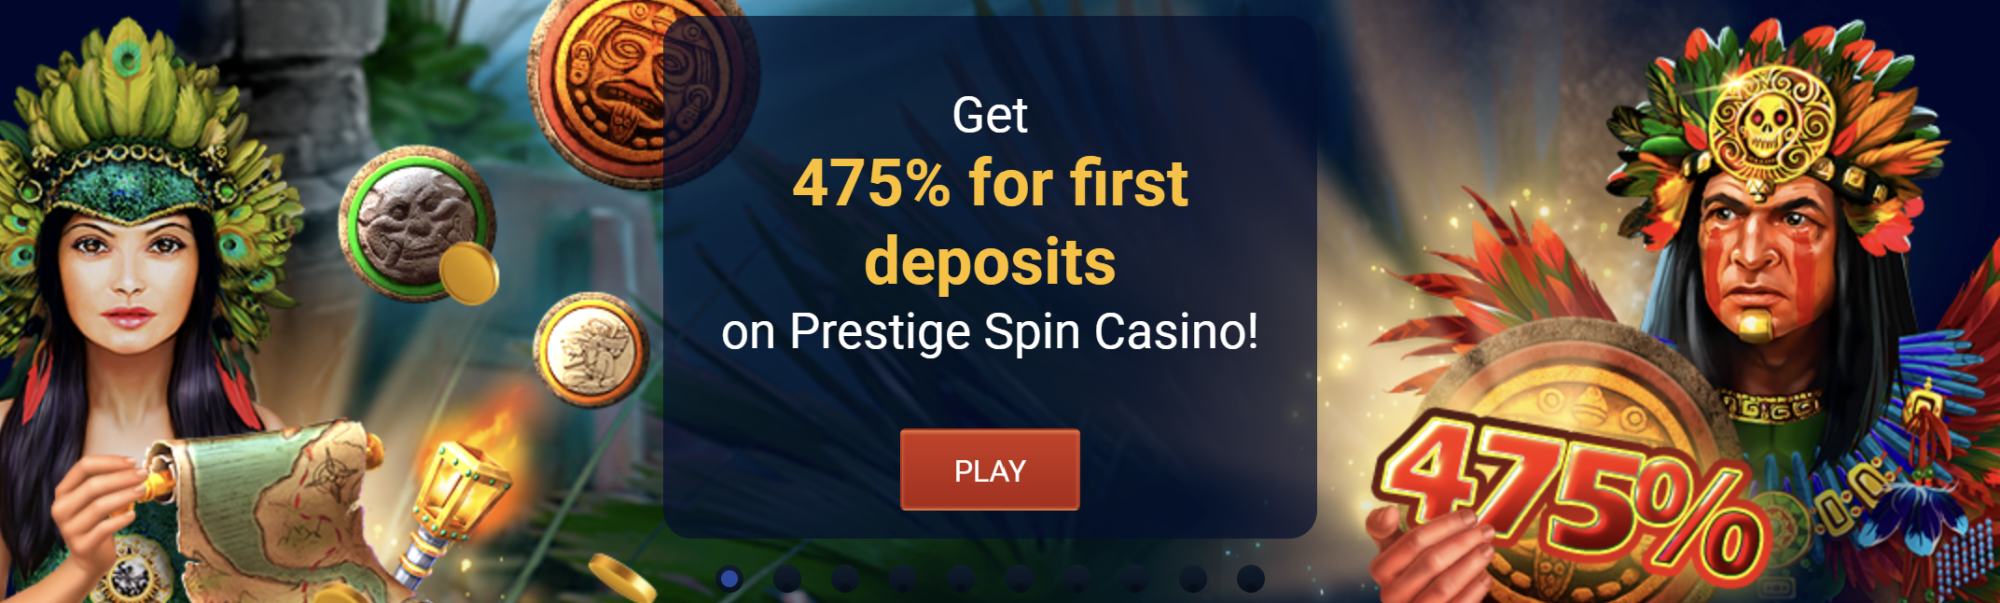 Prestige Spins Casino